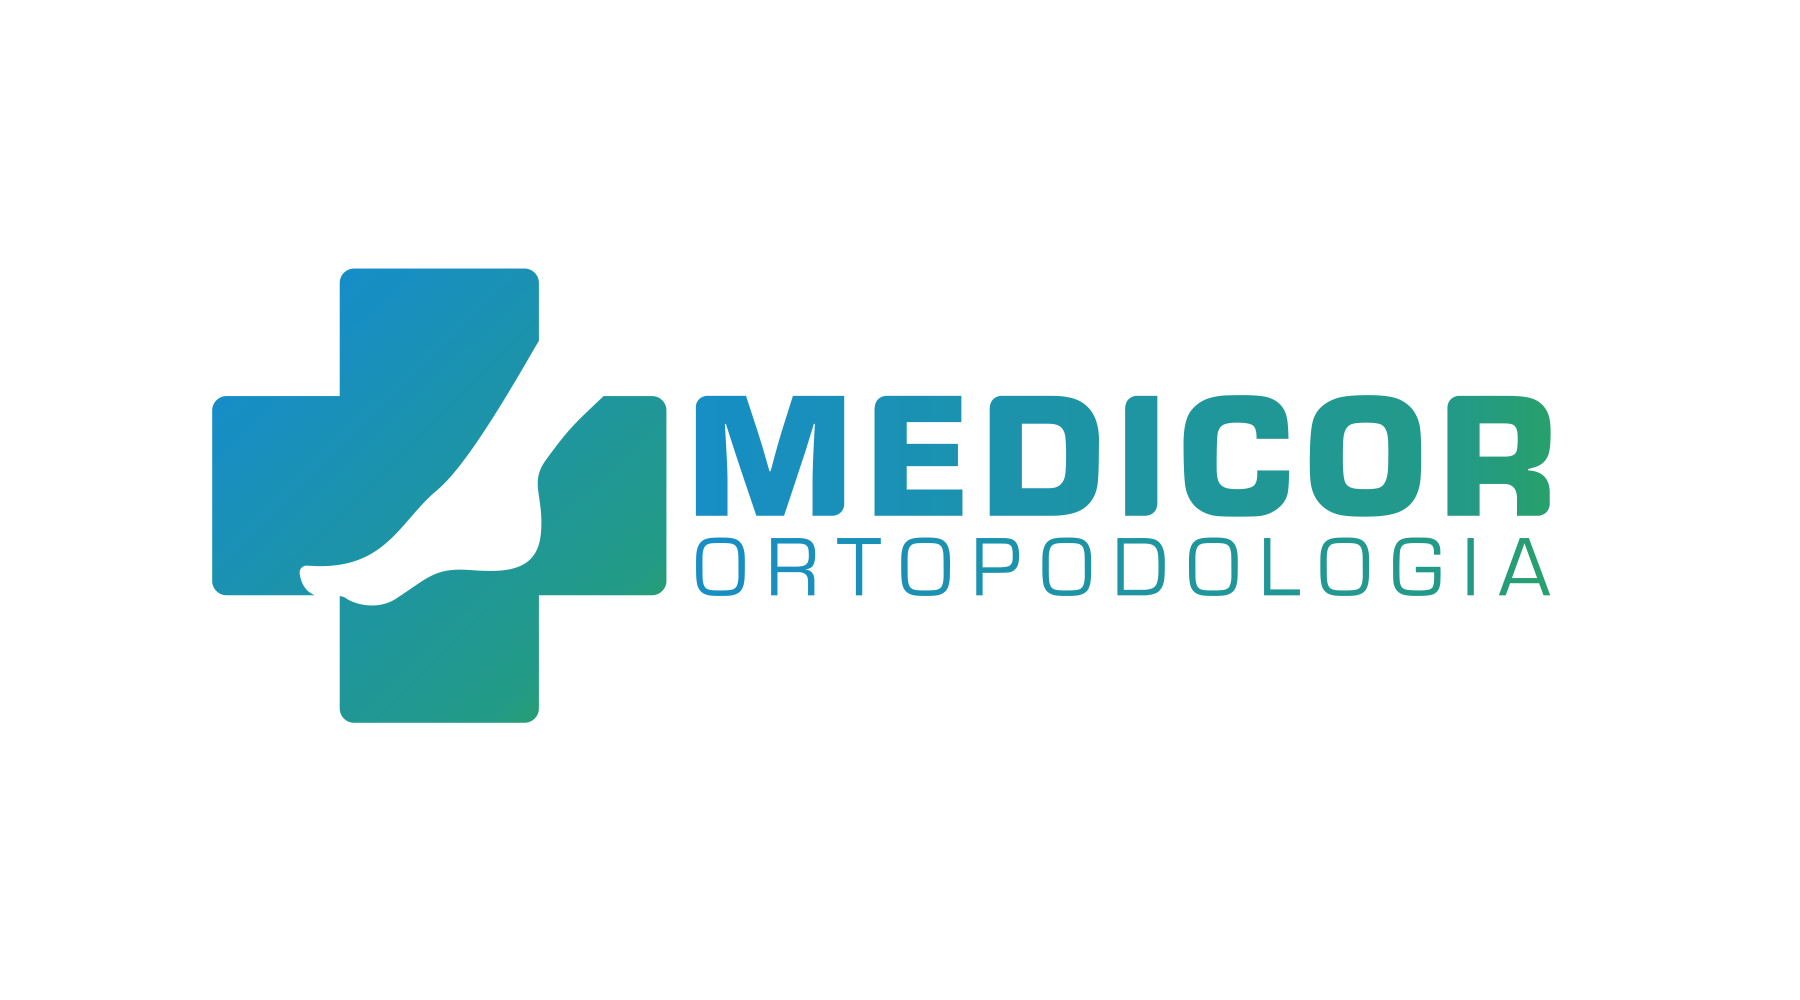 Medicor Legnica - ortopodolog, wkładki korekcyjne